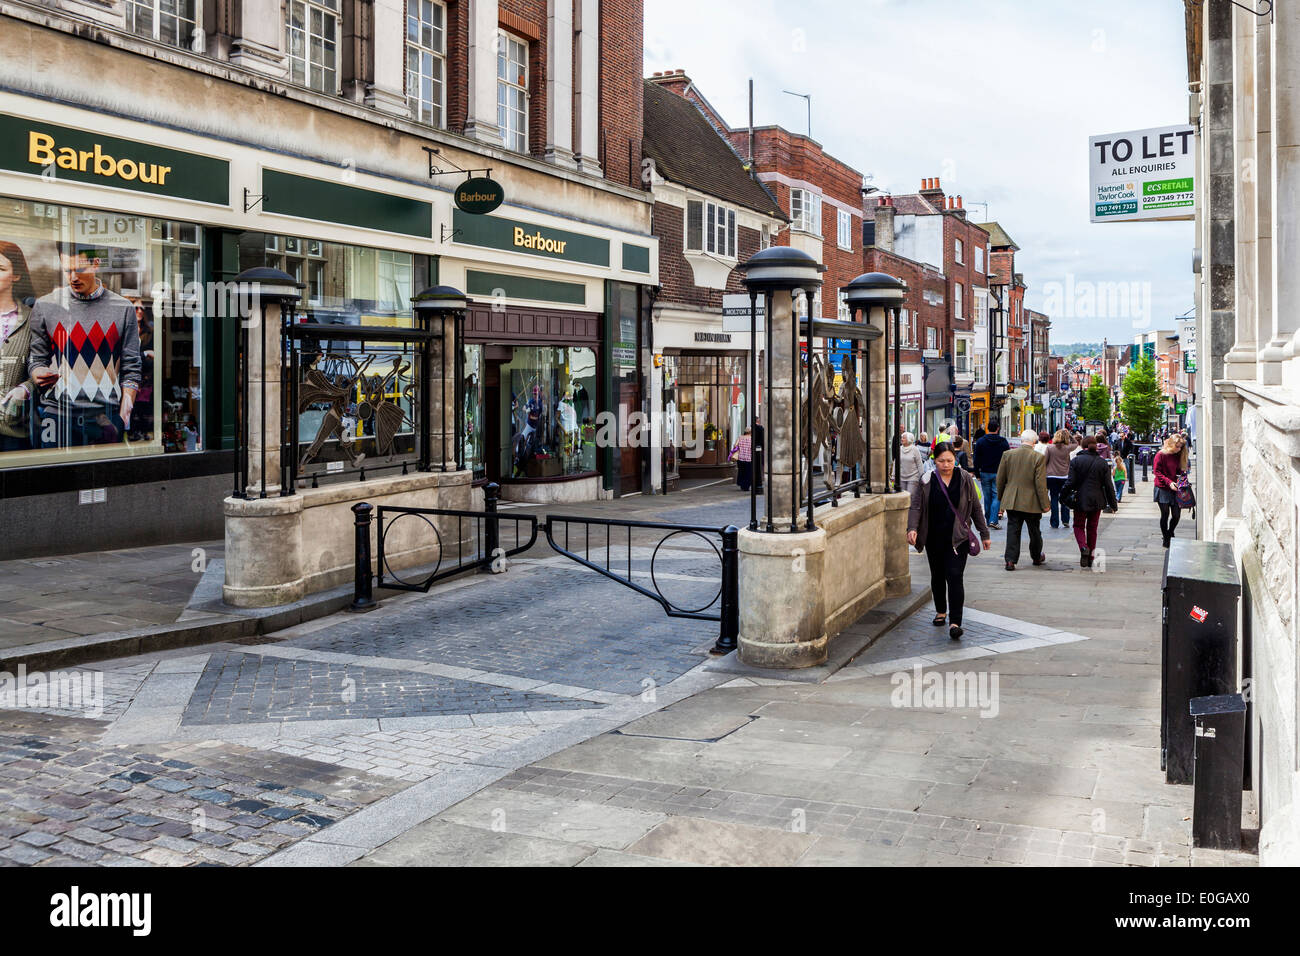 Peascod shopping street with decorative gates and trendy shops - Windsor, Berkshire, UK Stock Photo